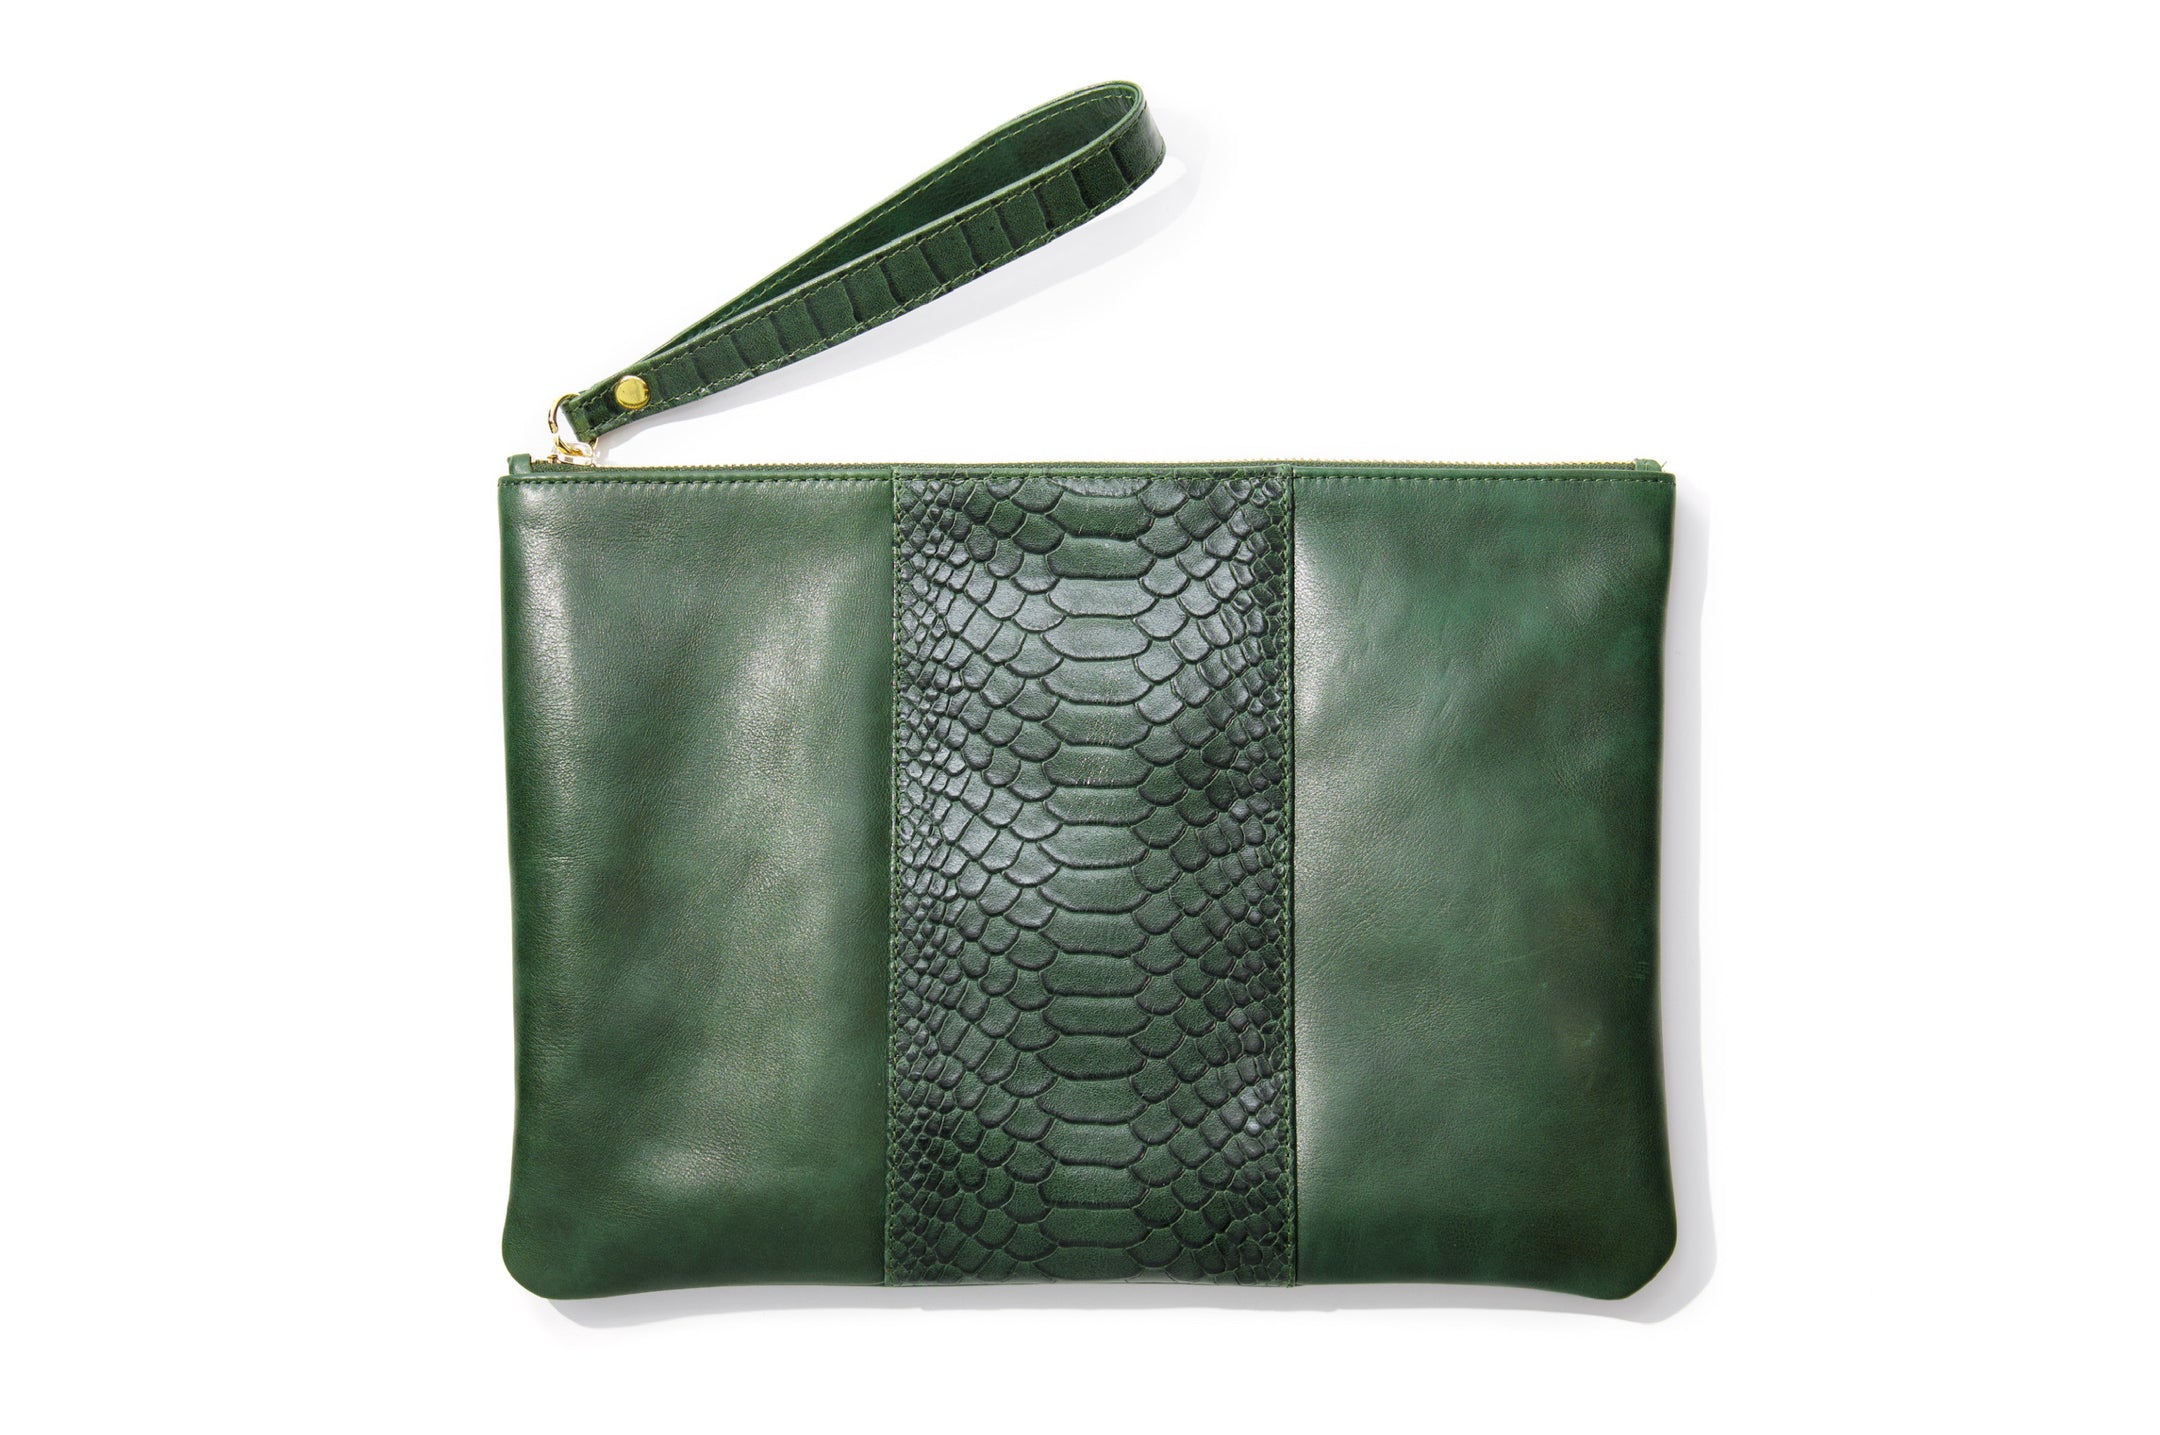 The Clutch - Green - Bags by Urbbana